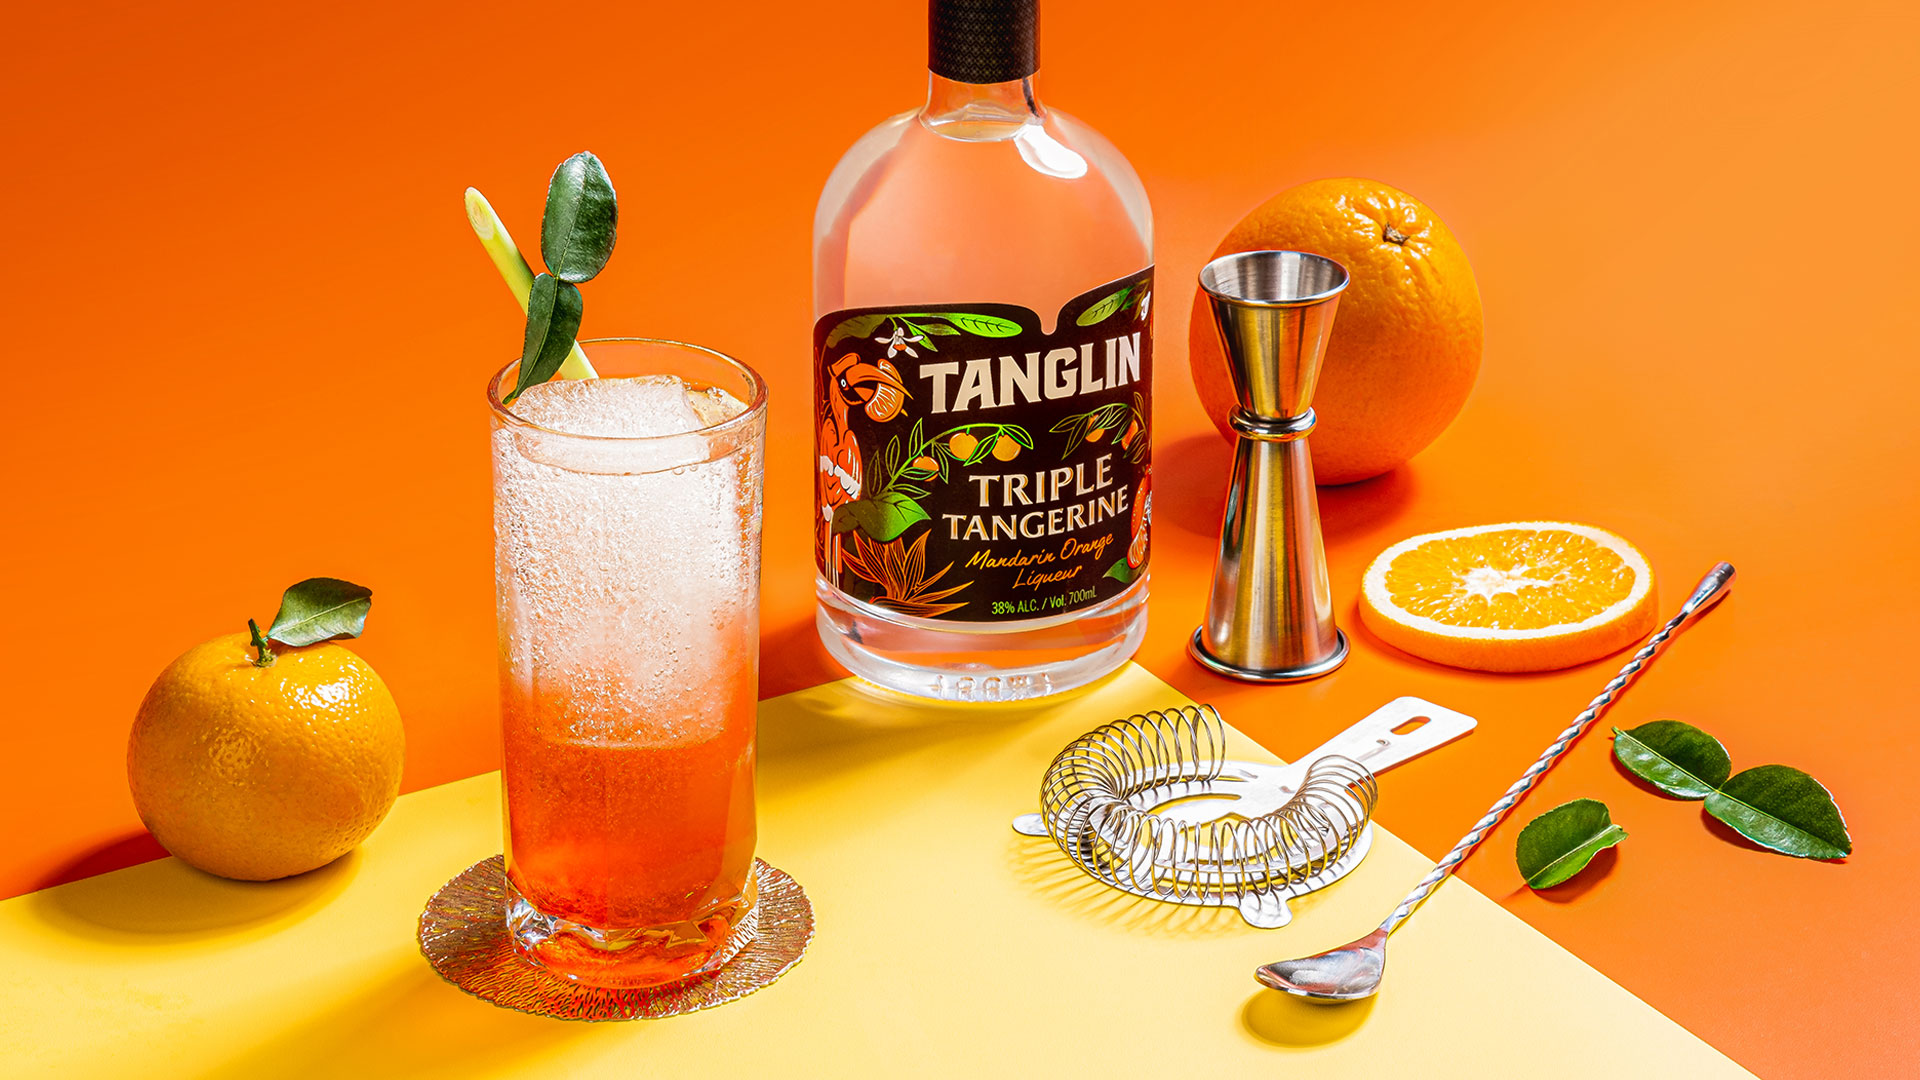 Tanglin Gin Triple Tangerine Packaging Design